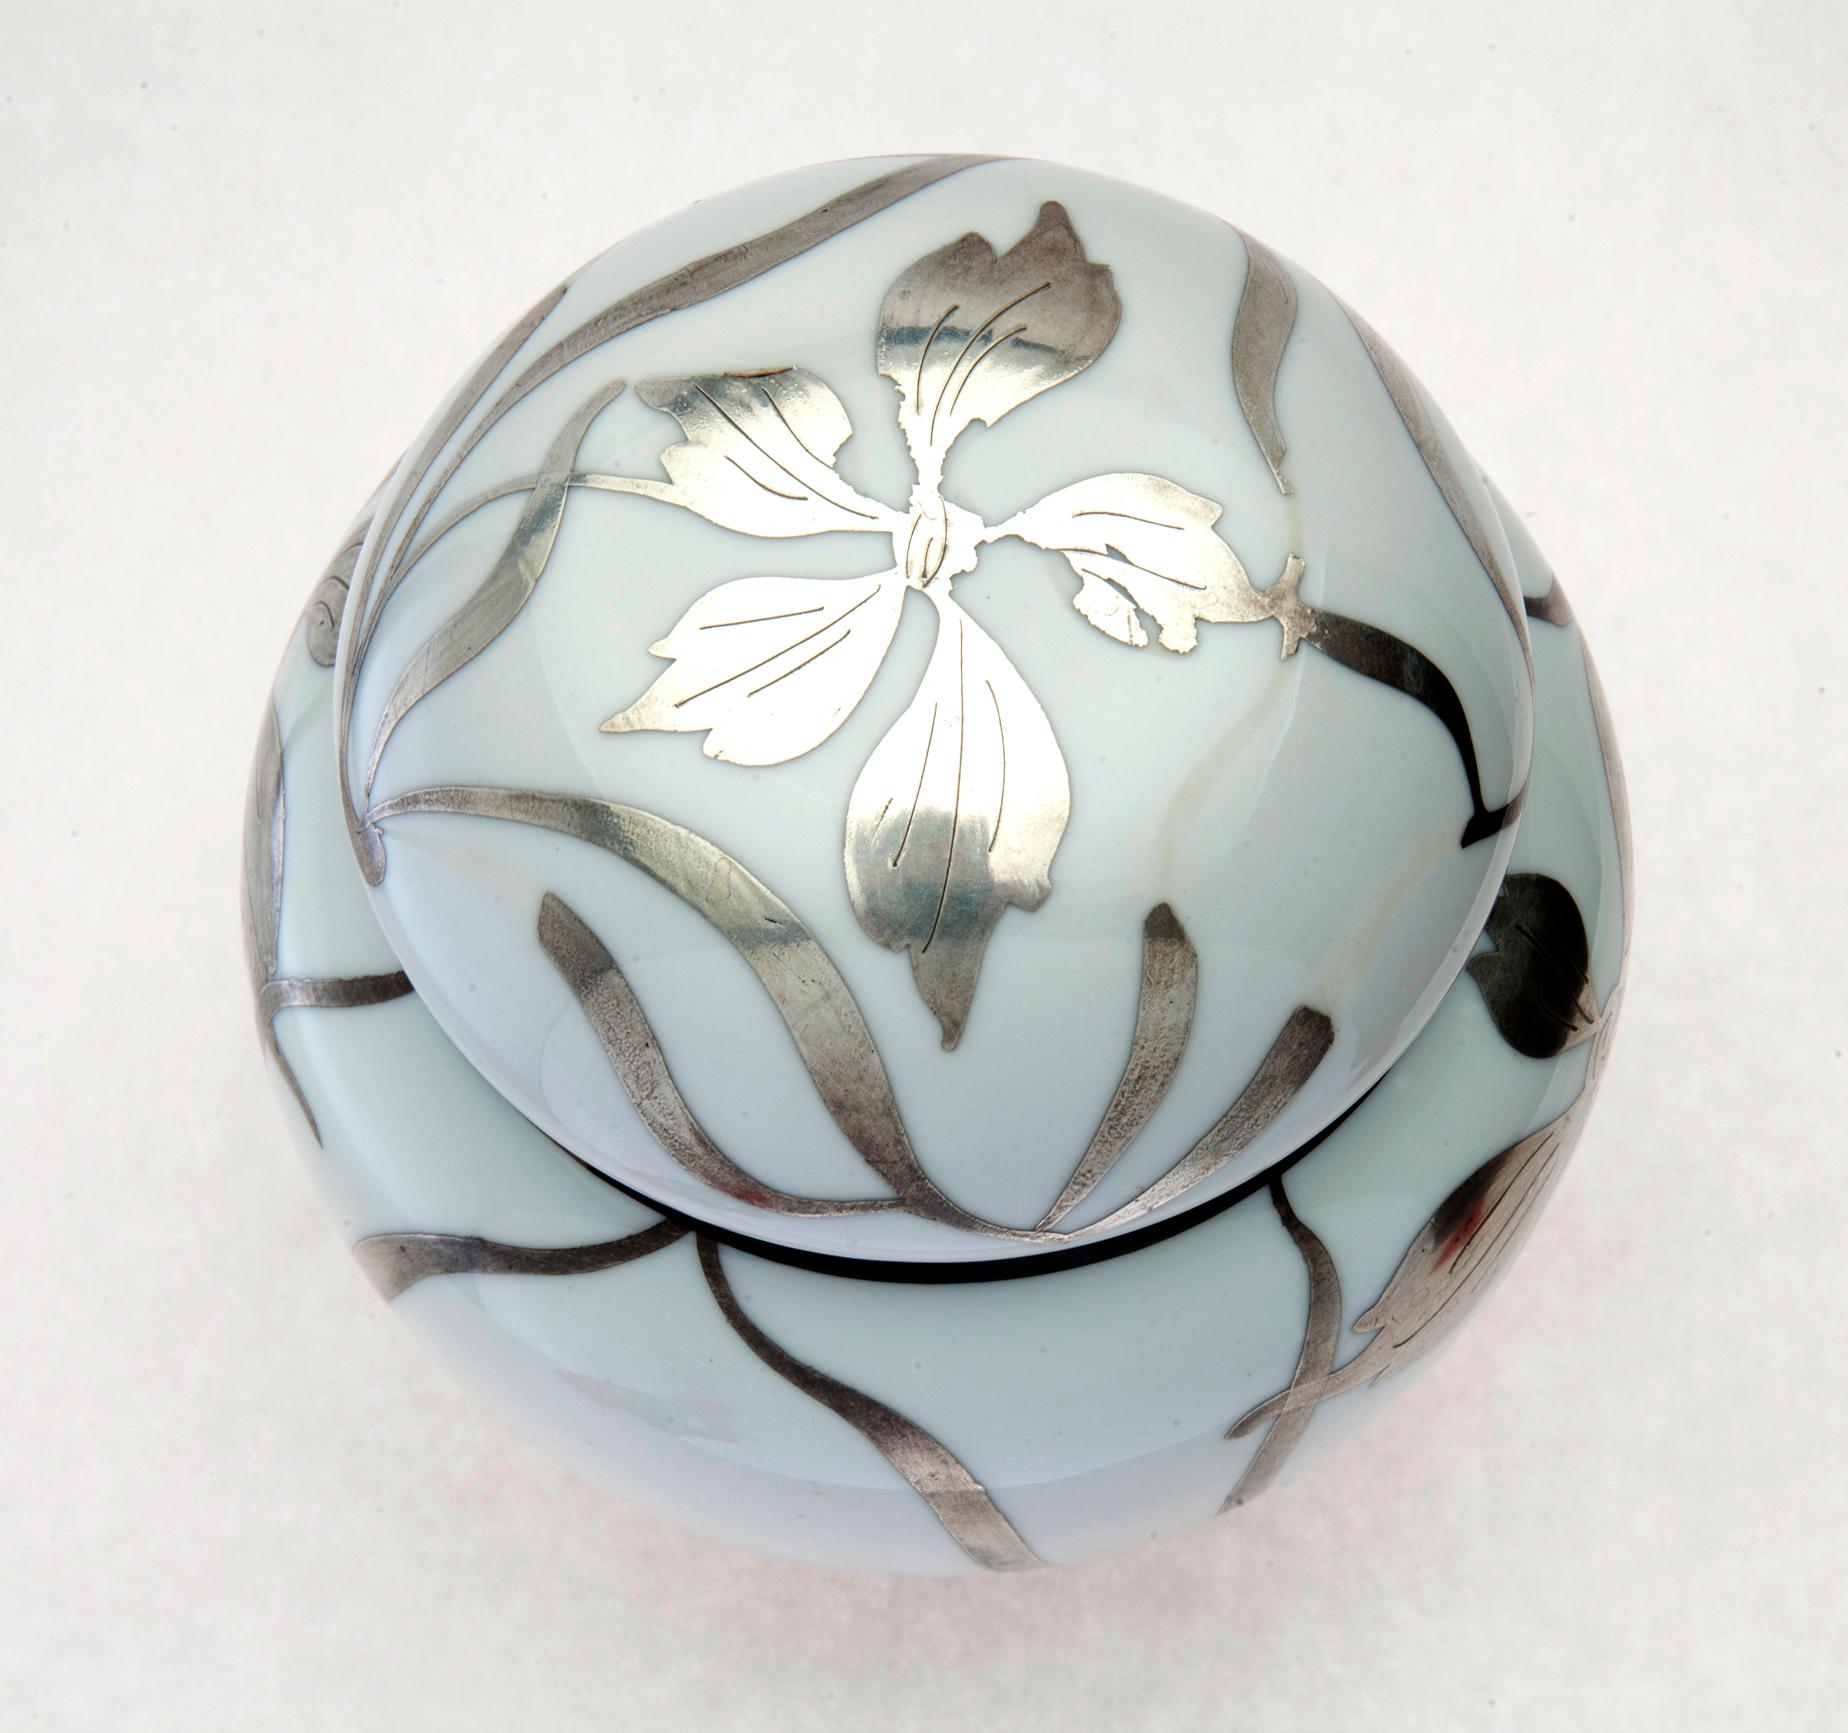 Art Nouveau ginger jar in fine porcelain with sterling silver overlay.